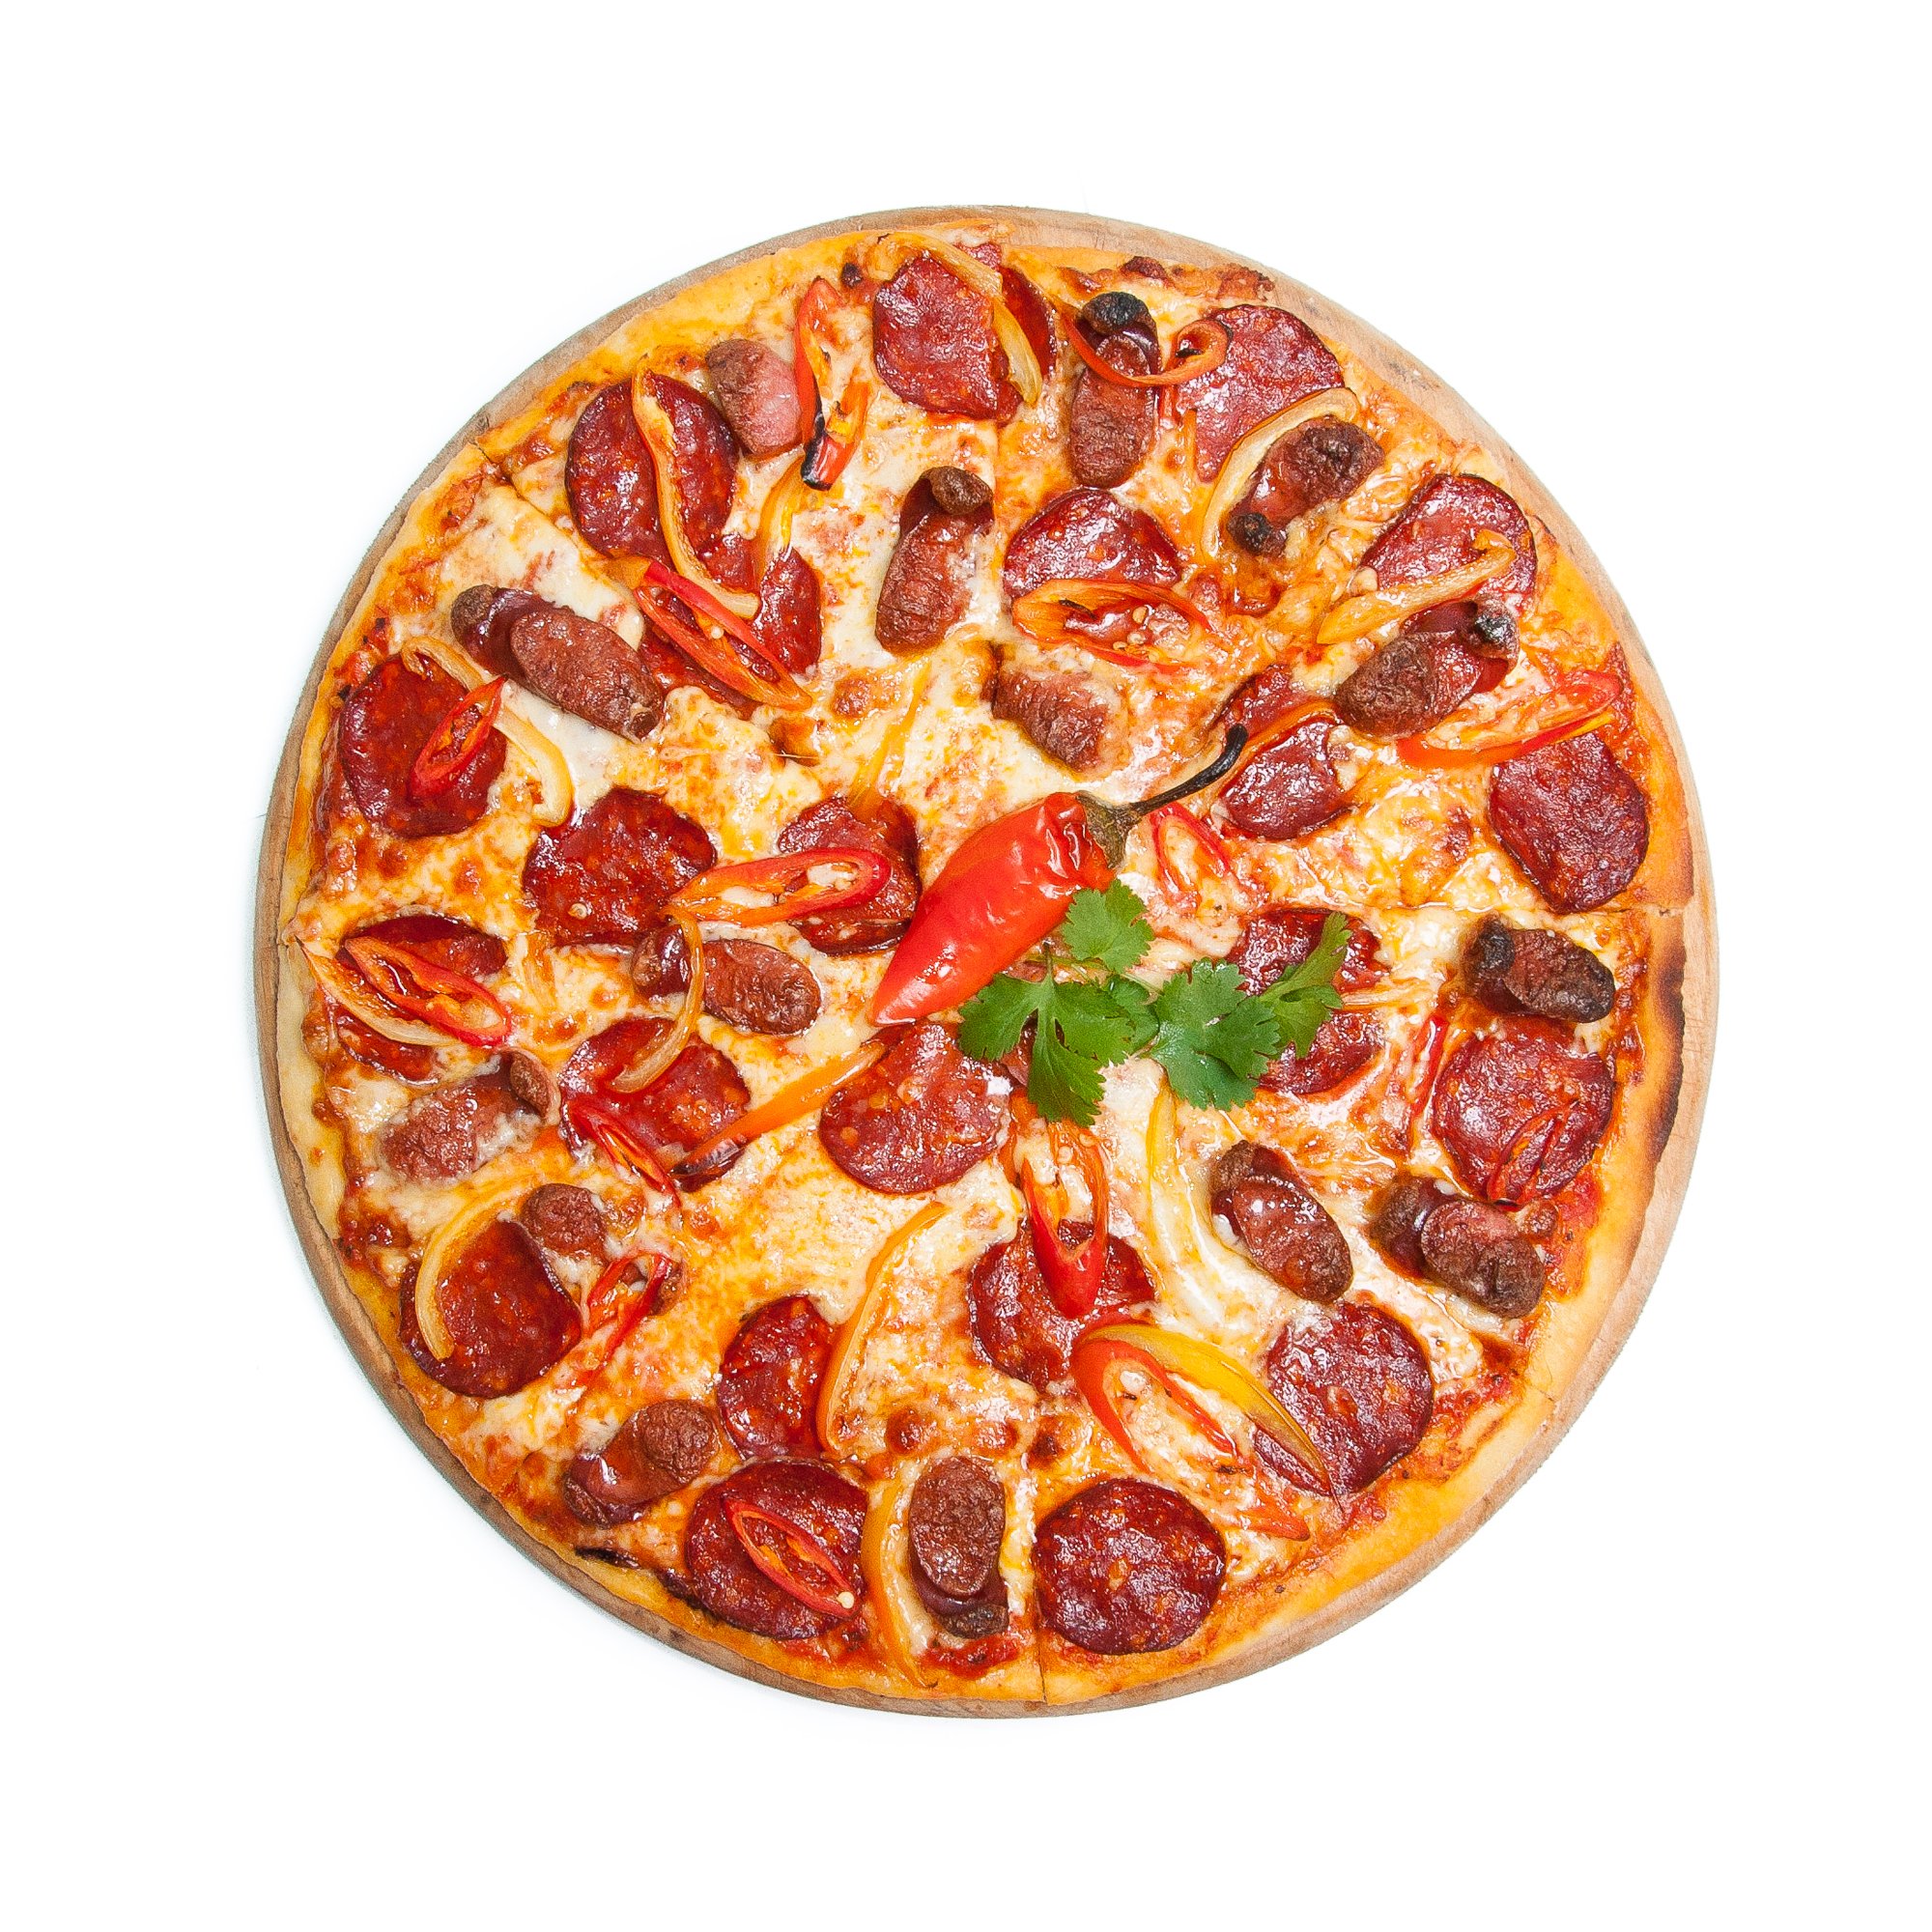 пепперони пицца фото на белом фоне фото 52